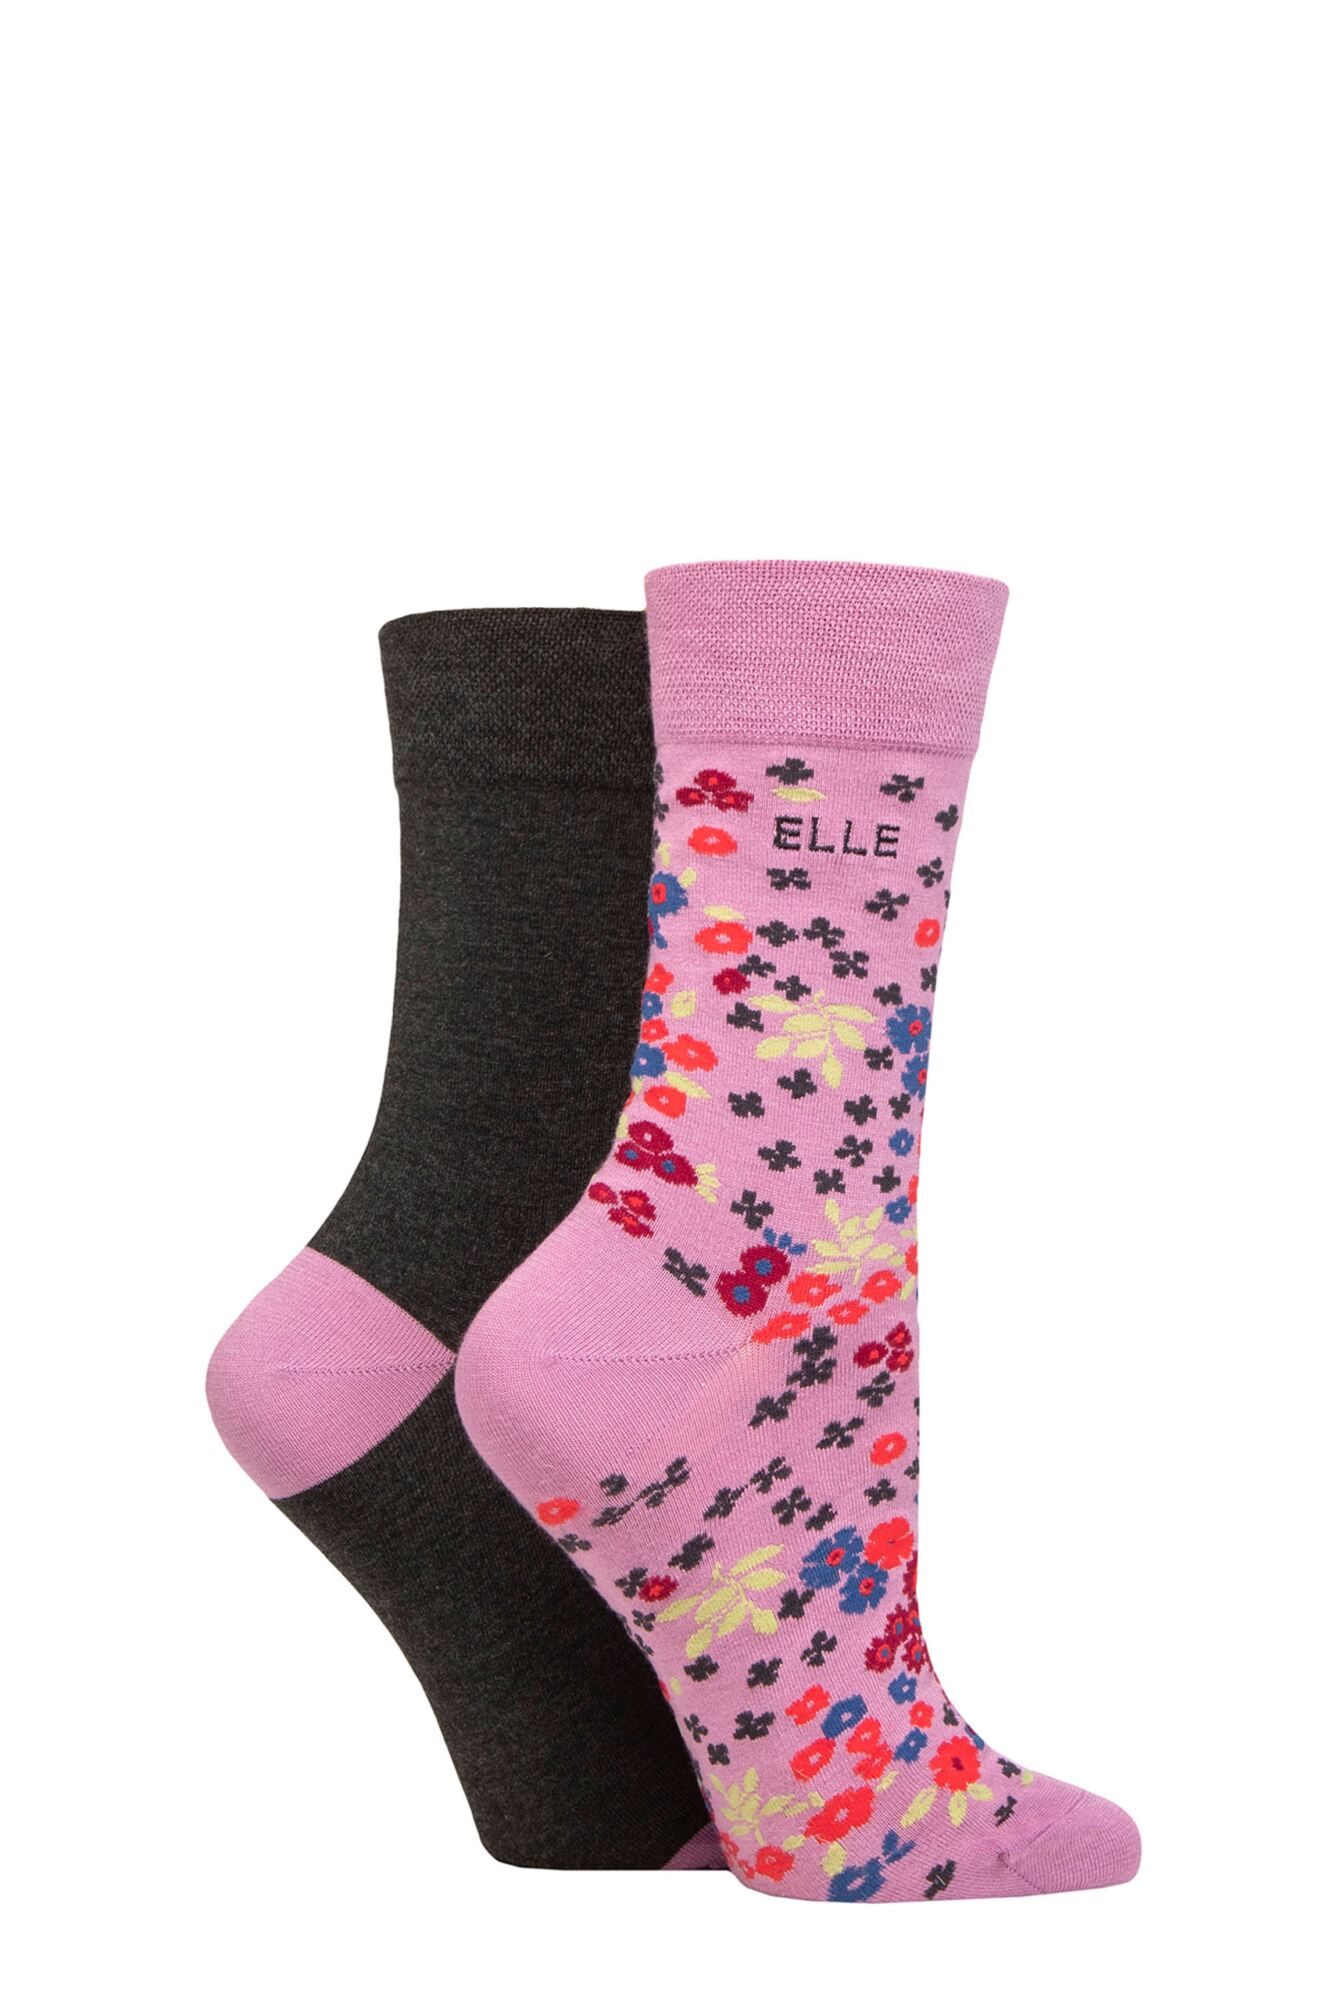 Ladies Elle Bamboo Patterned and Plain Socks | SOCKSHOP